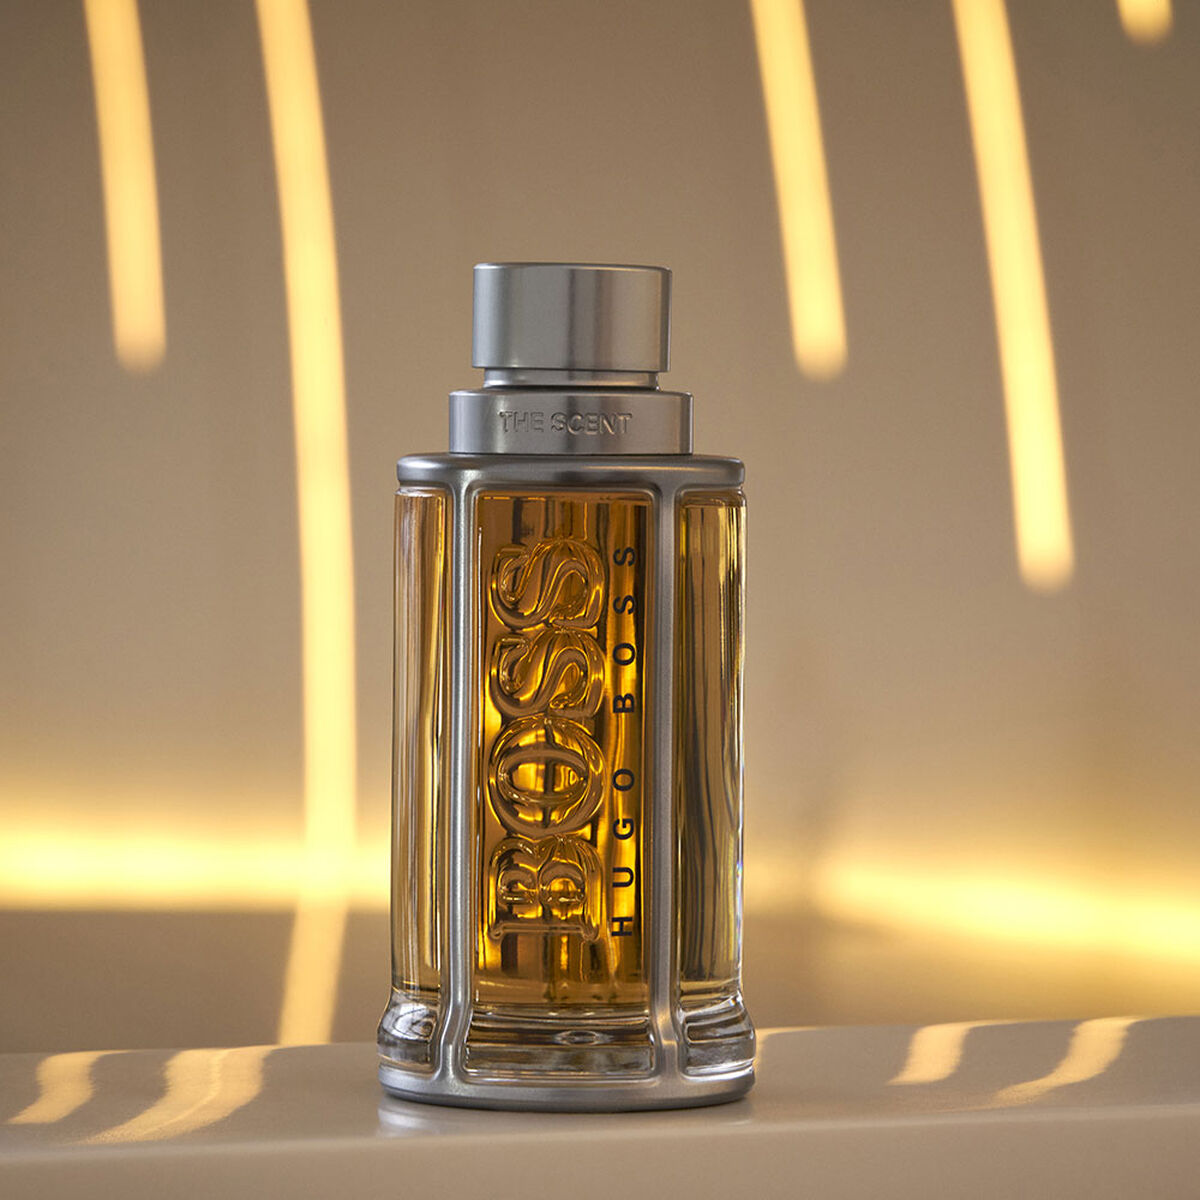 Perfume Hugo Boss The Scent EDT 100 ml